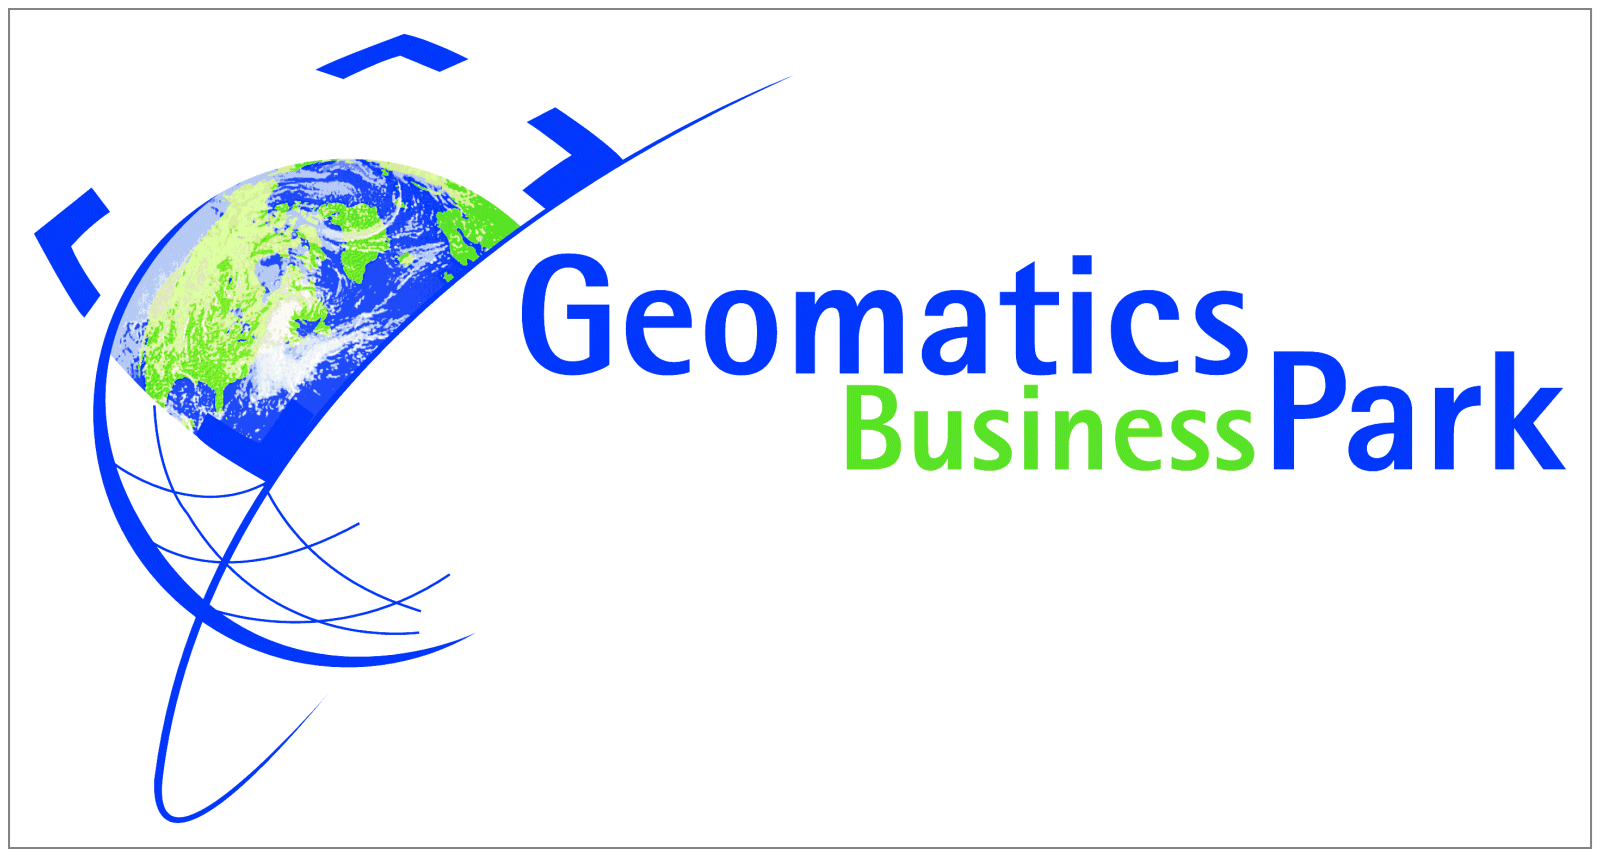 GBP - Geomatics Business Park - since Nov 2000